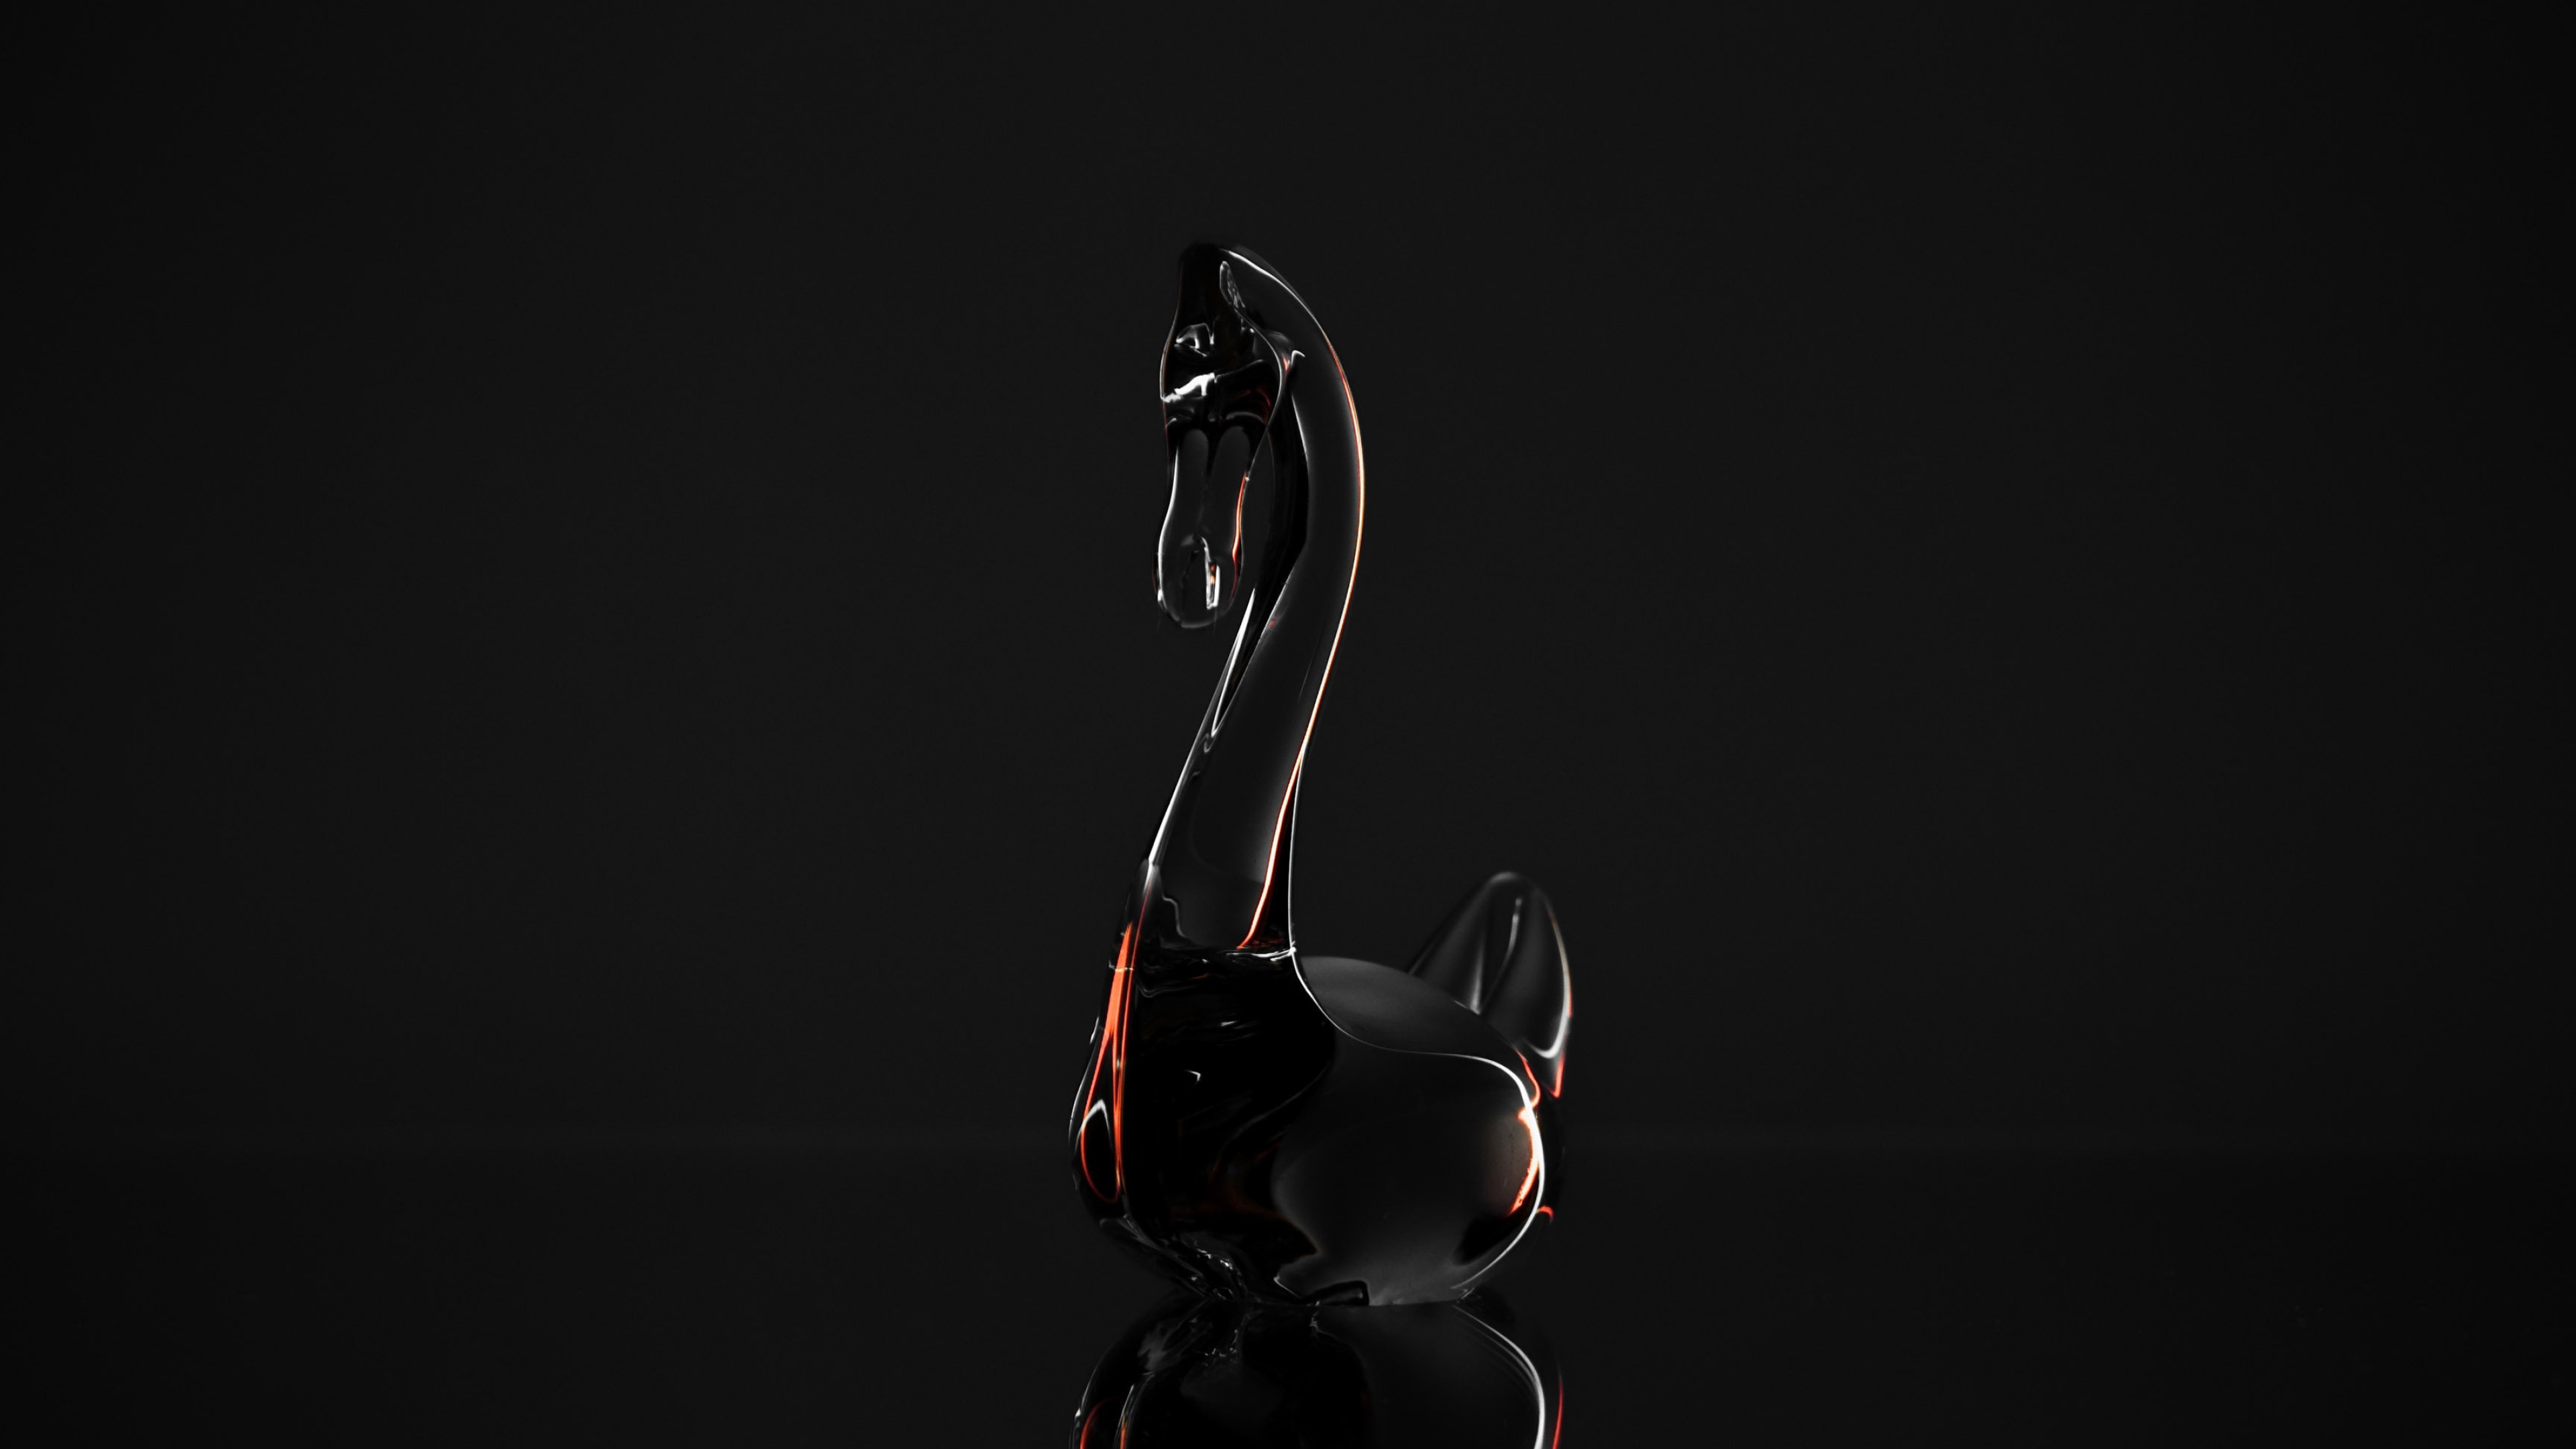 Black Swan (Bird): Glass, Native to Australia, Waterbird. 3840x2160 4K Wallpaper.